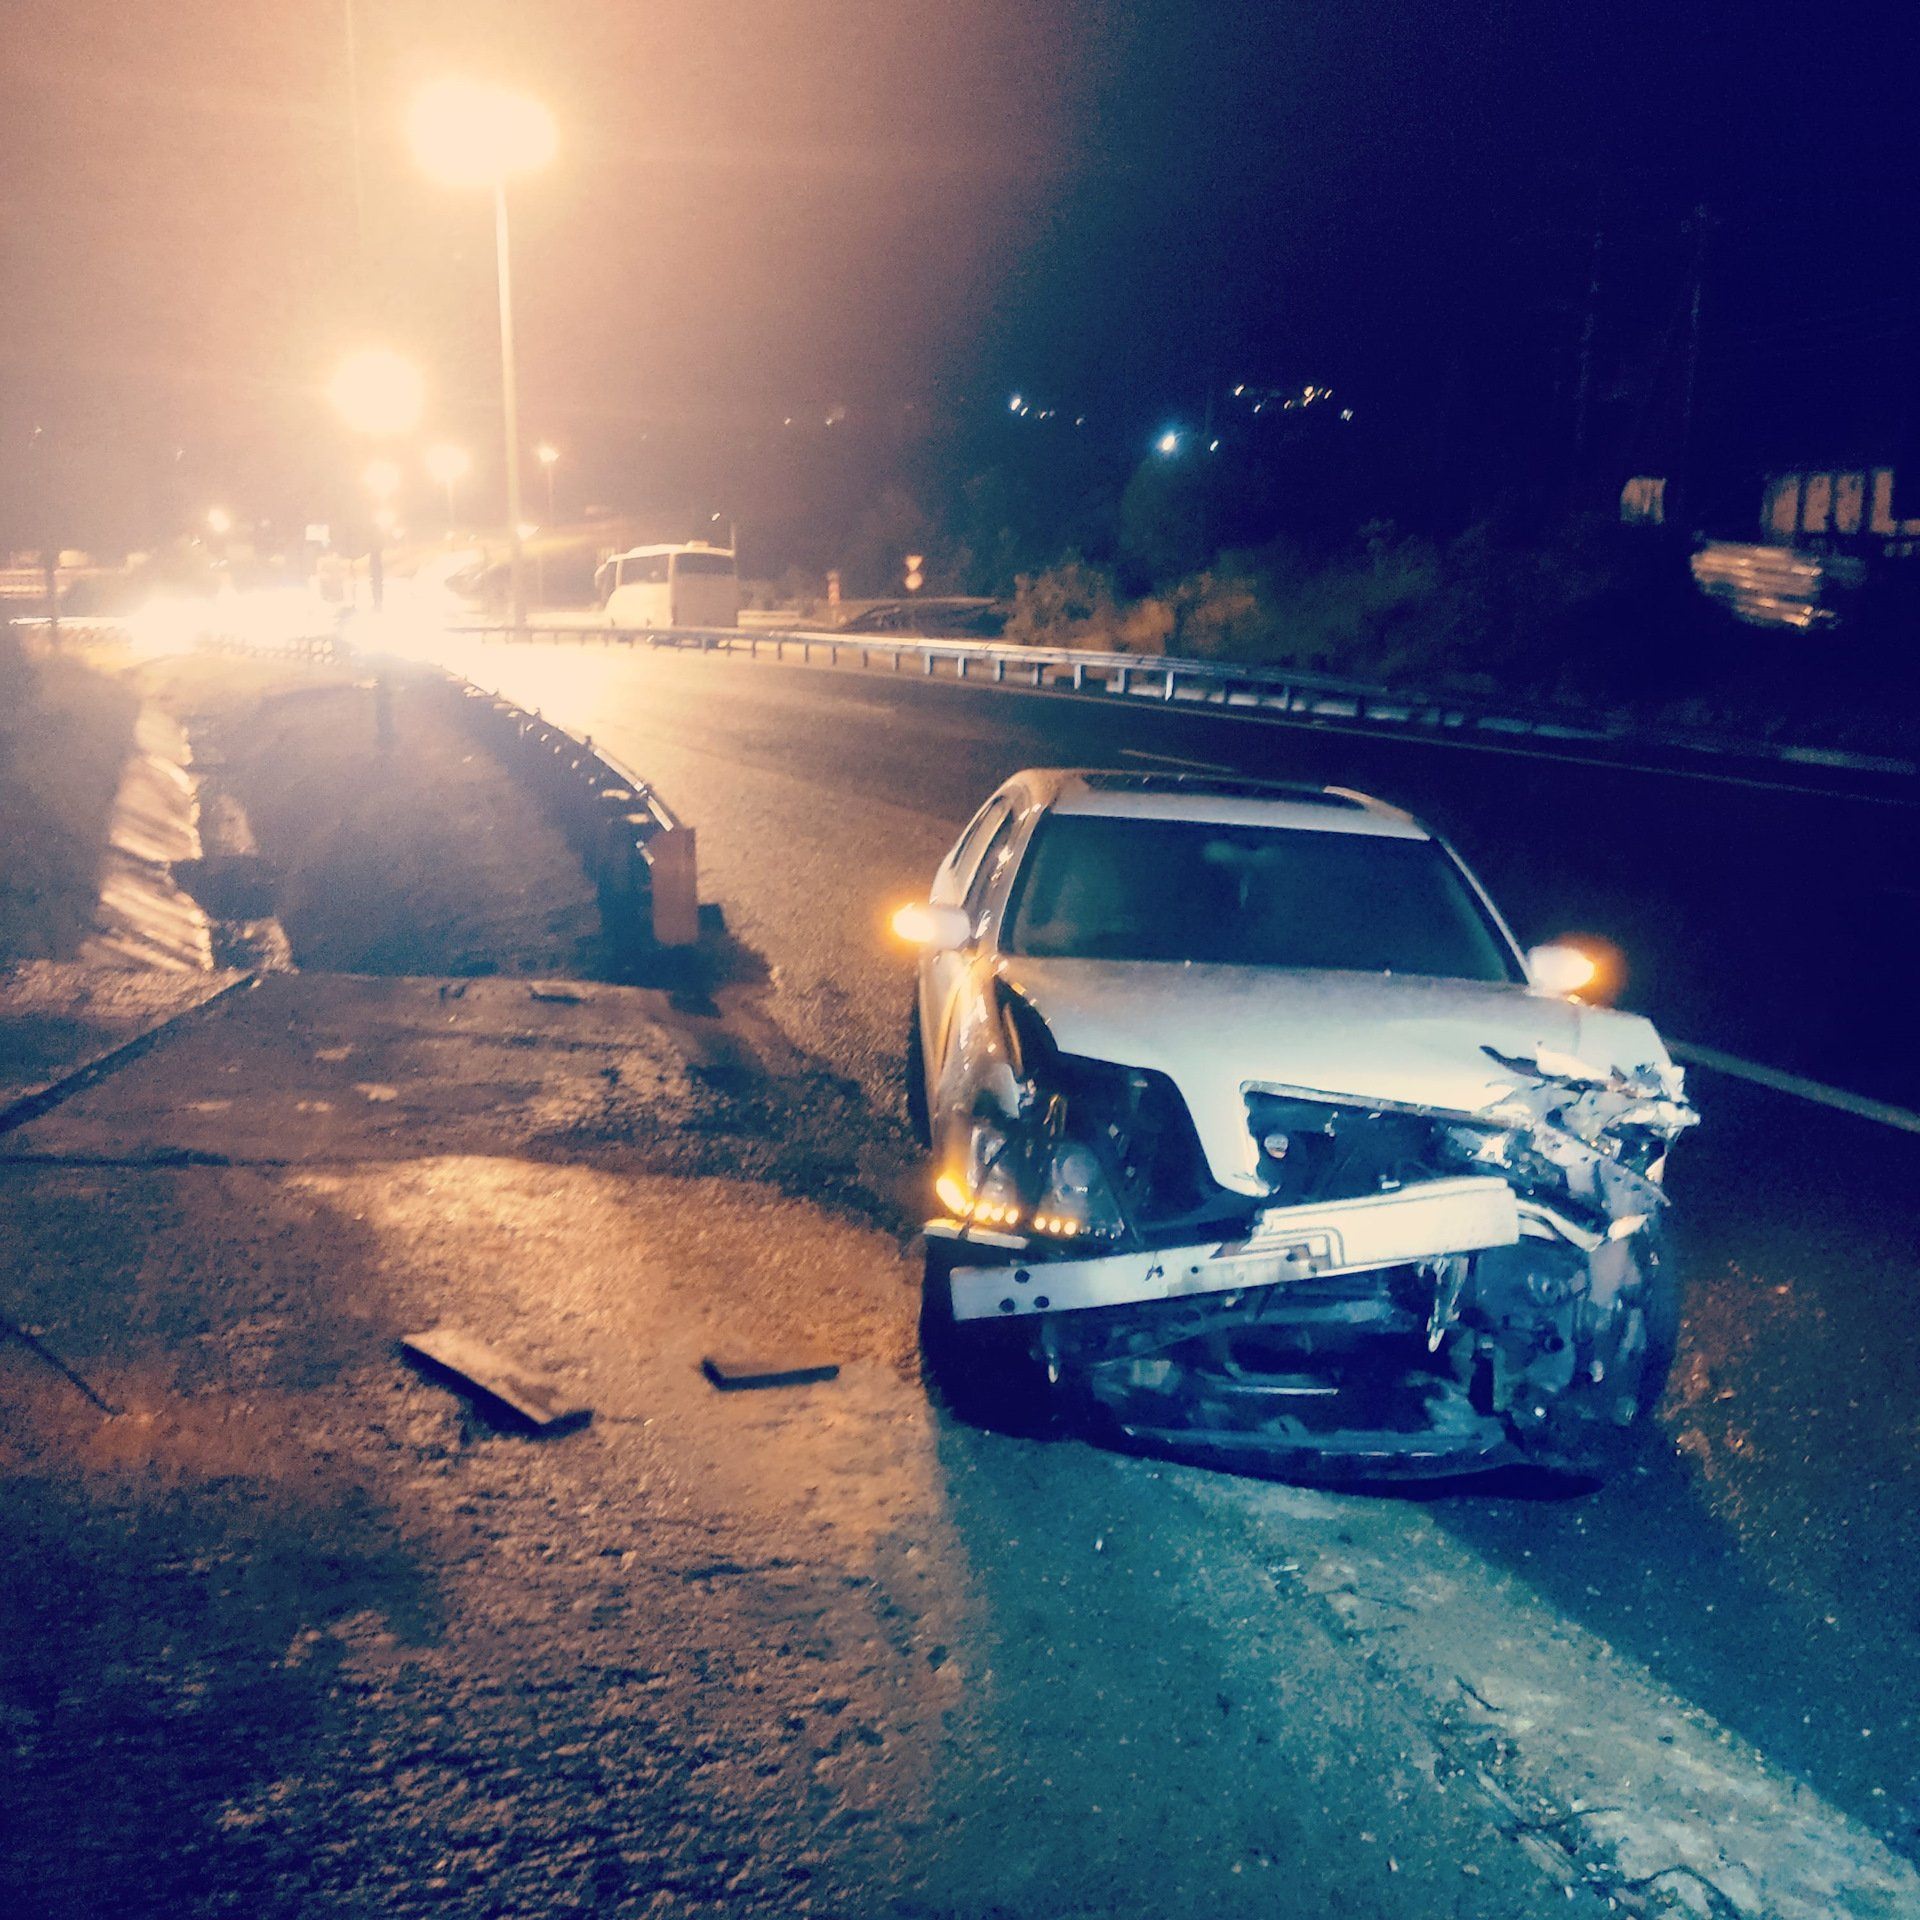 Разбили машину ночью. Разбитый Toyota Altezza зимой. Разбитый Чайзер 100 ночью зимой. Разбитая машина зима ночь.